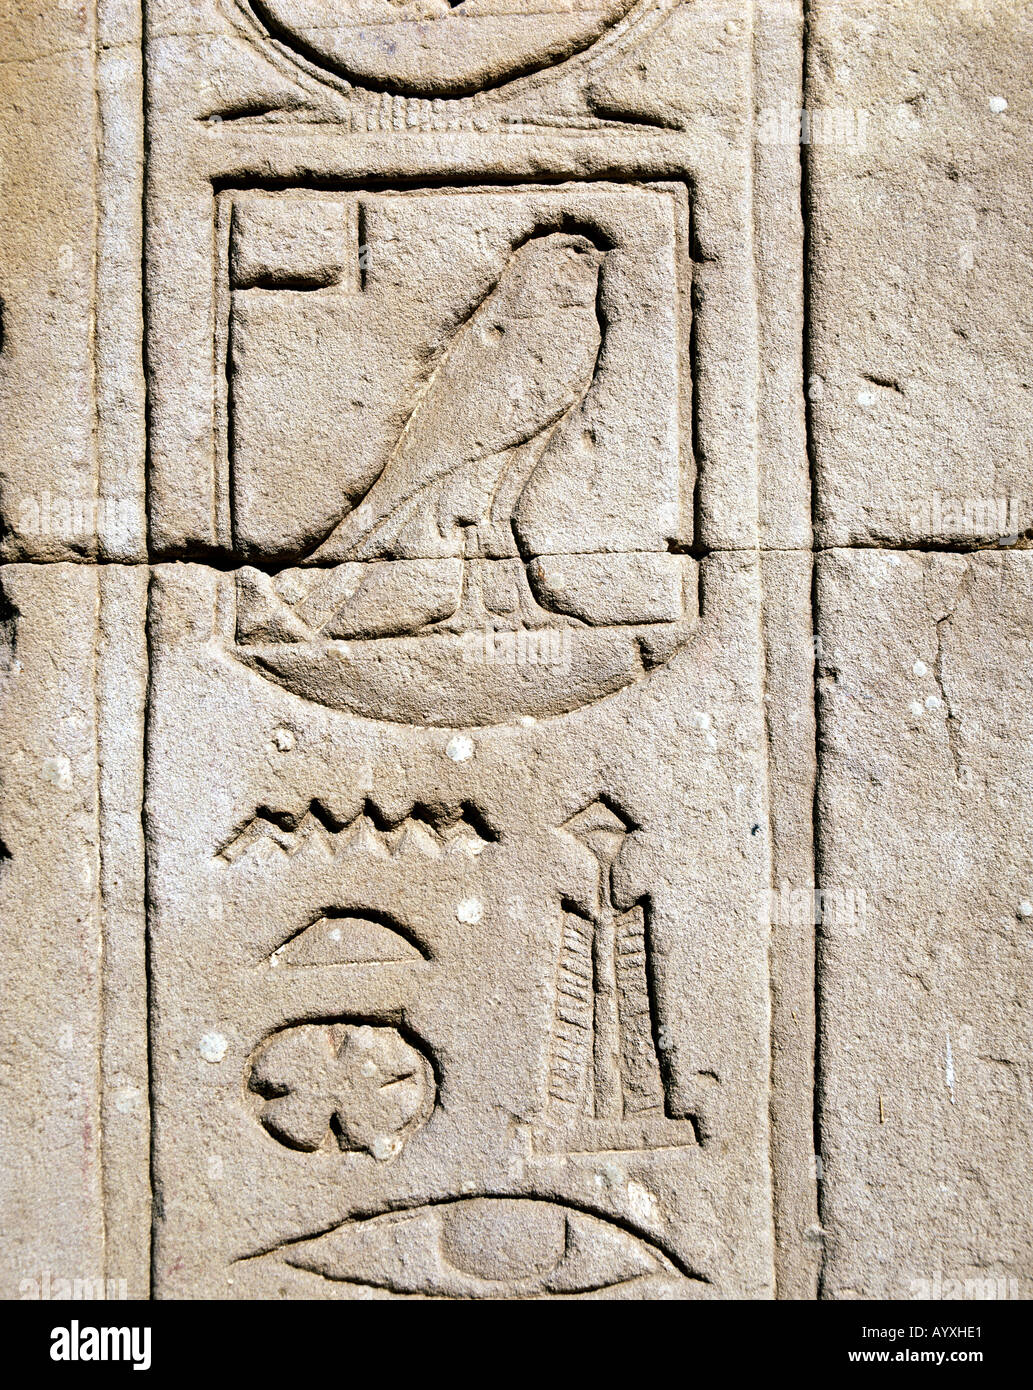 Horustempel Ausgrabungsstaette Ausgrabungen,,,,, Hieroglyphen Wandrelief Edfou, Oberaegypten Banque D'Images